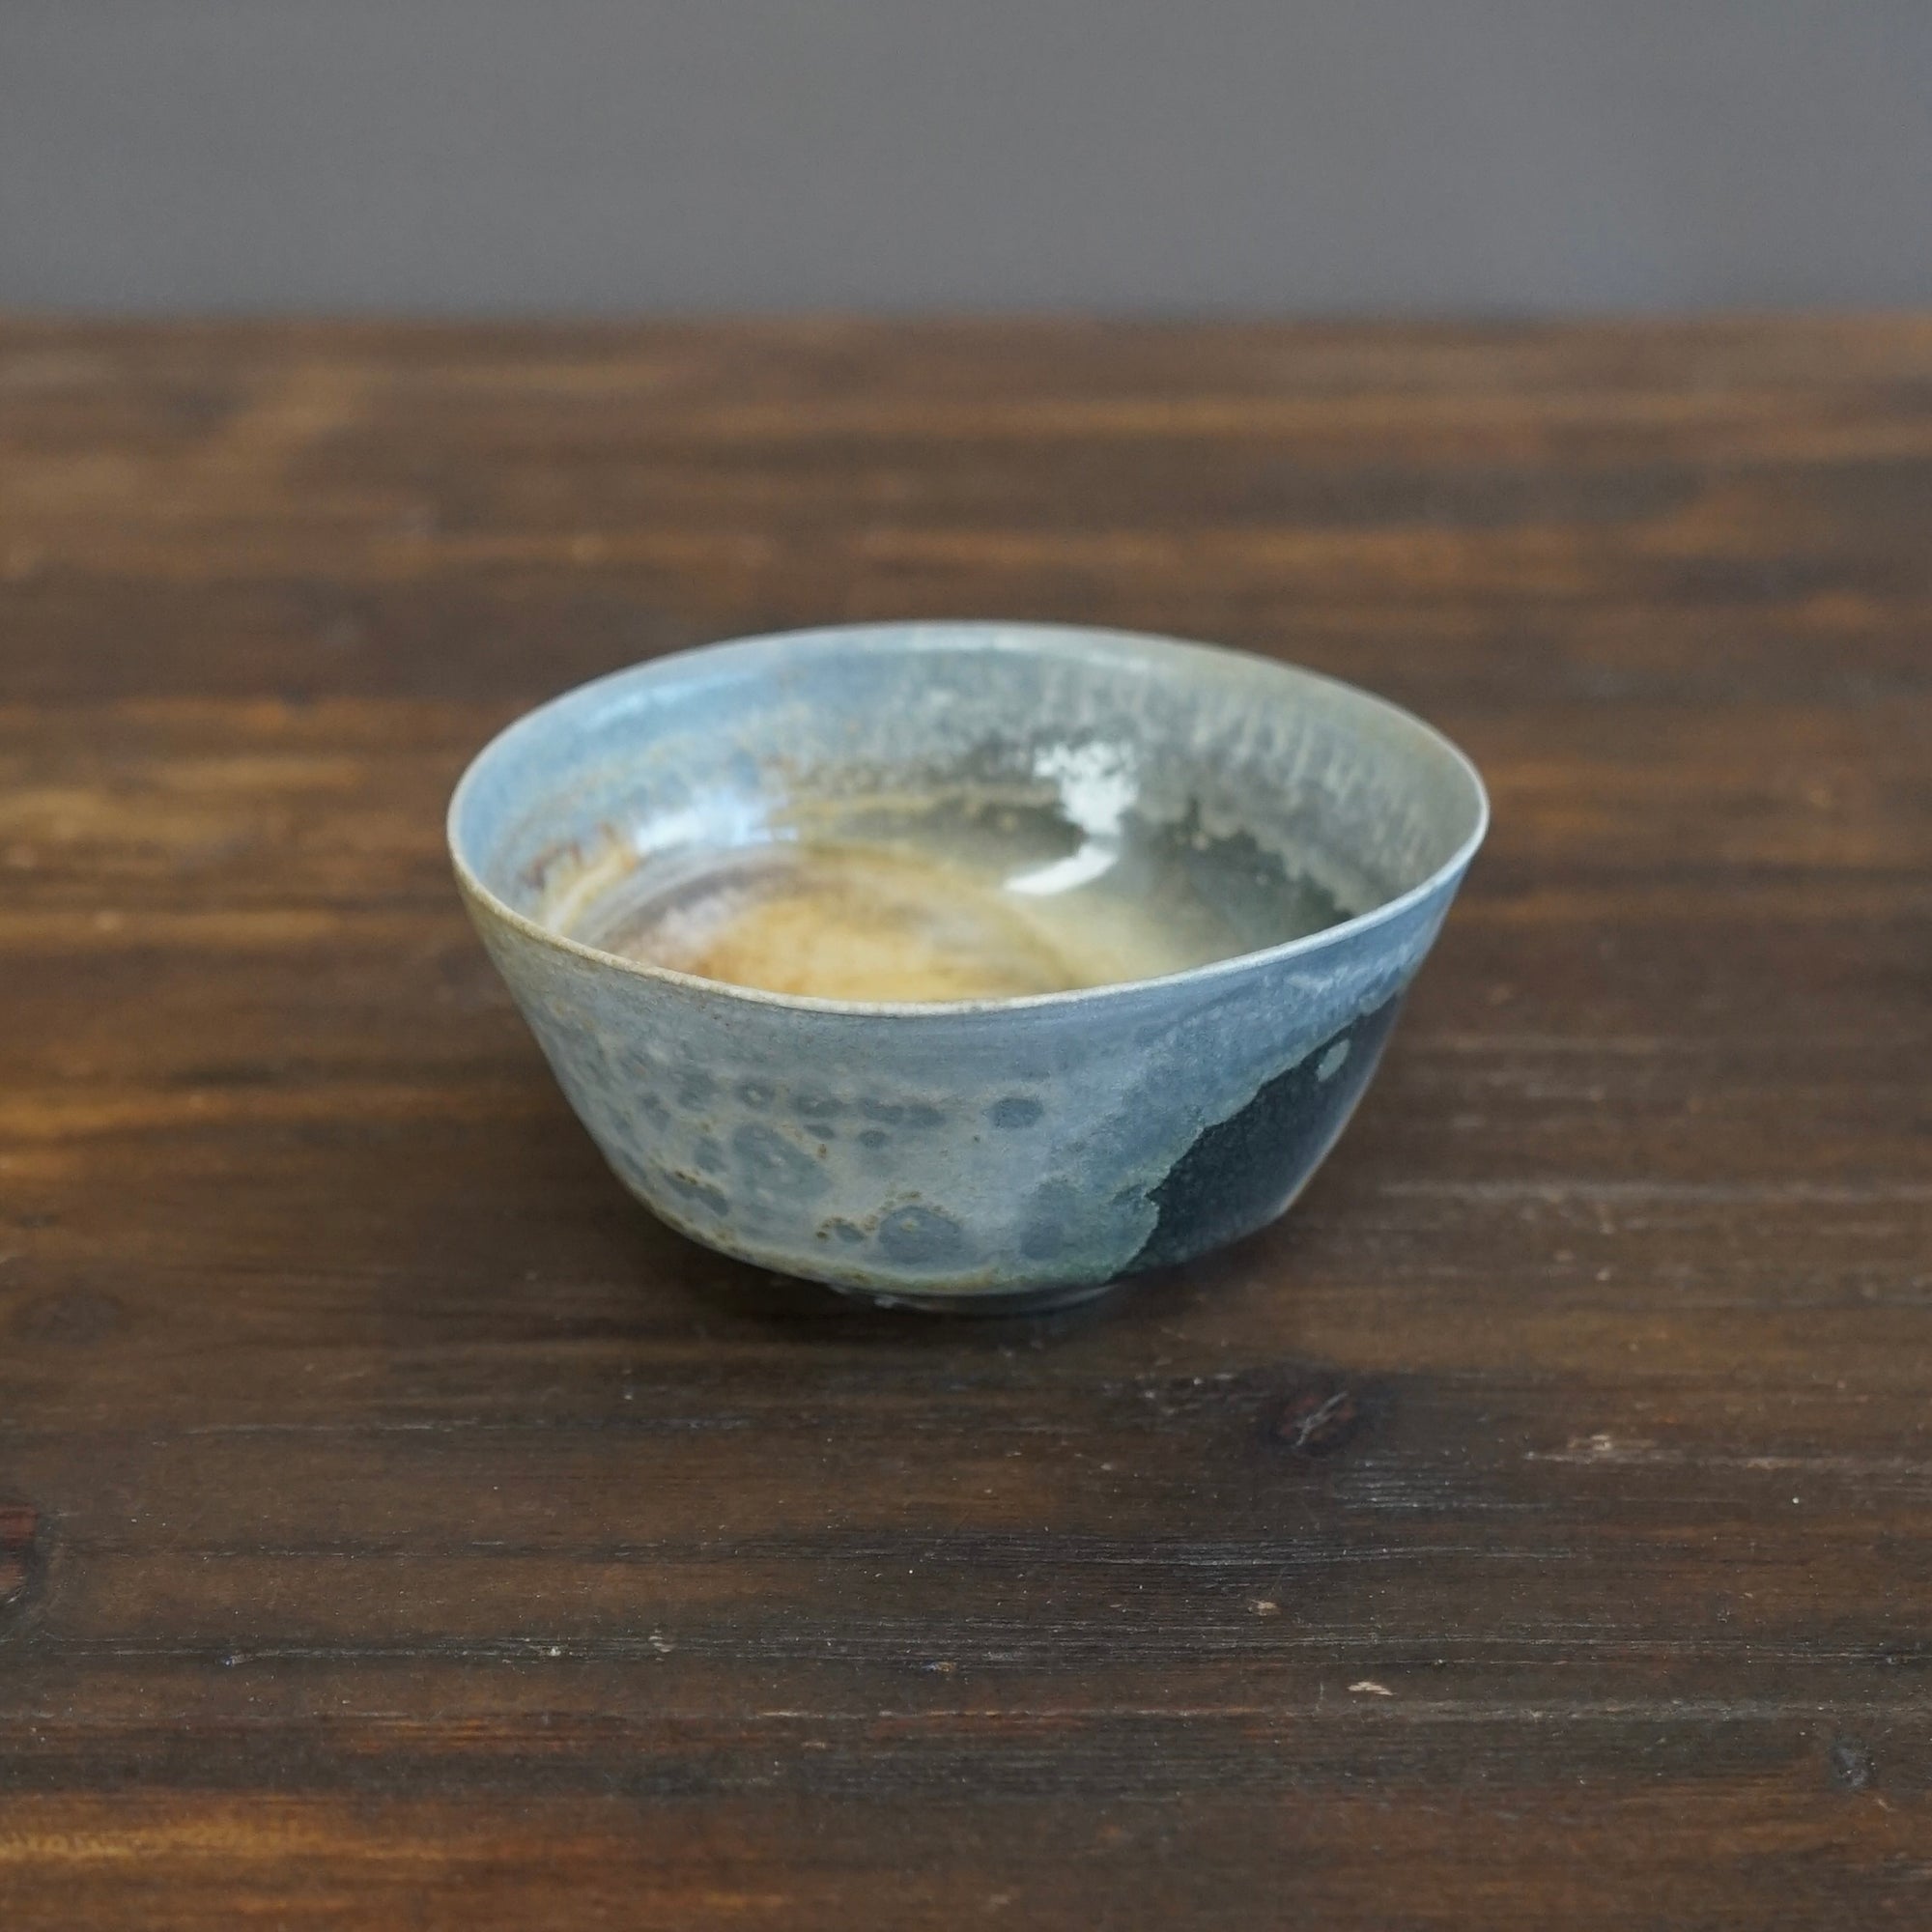 Iwachu Ironware - Sara Japanese Pottery